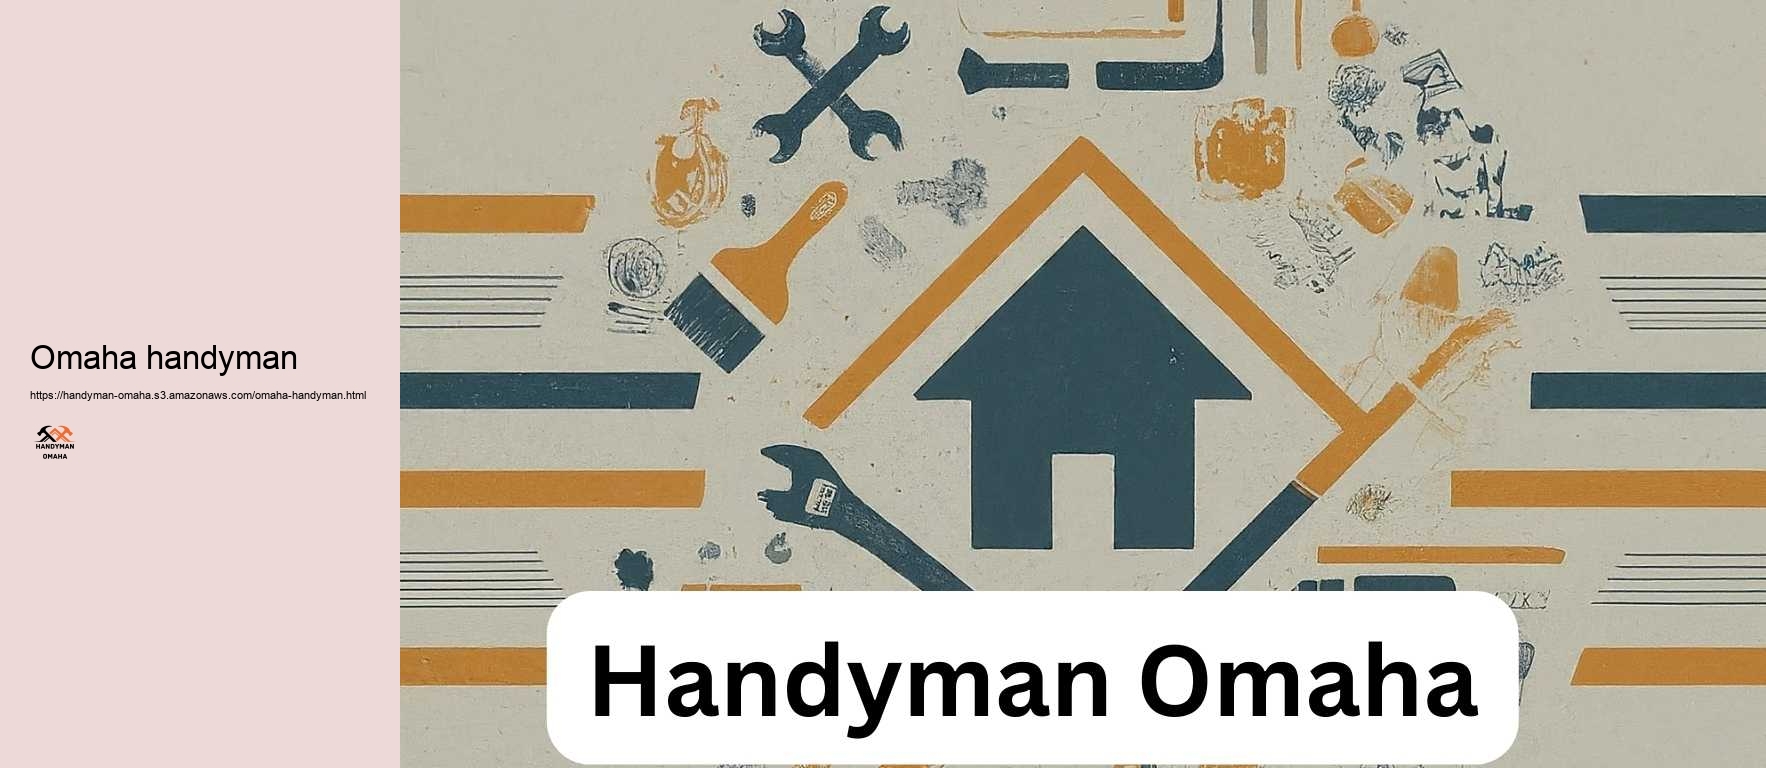 Omaha handyman